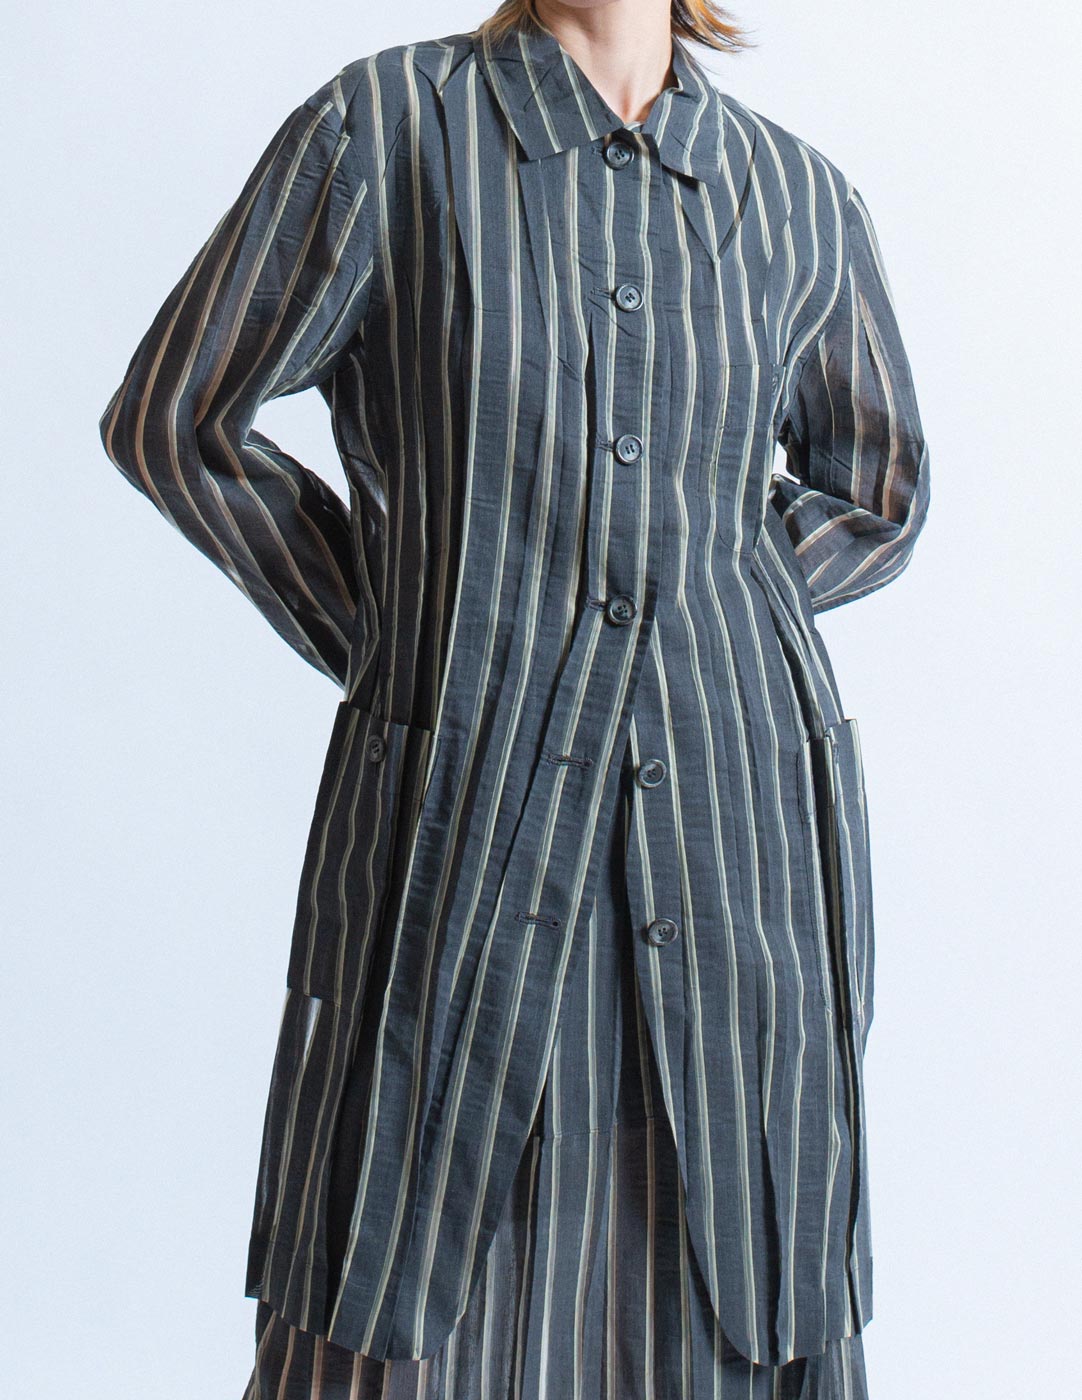 Issey Miyake vintage striped three-piece ensemble detail